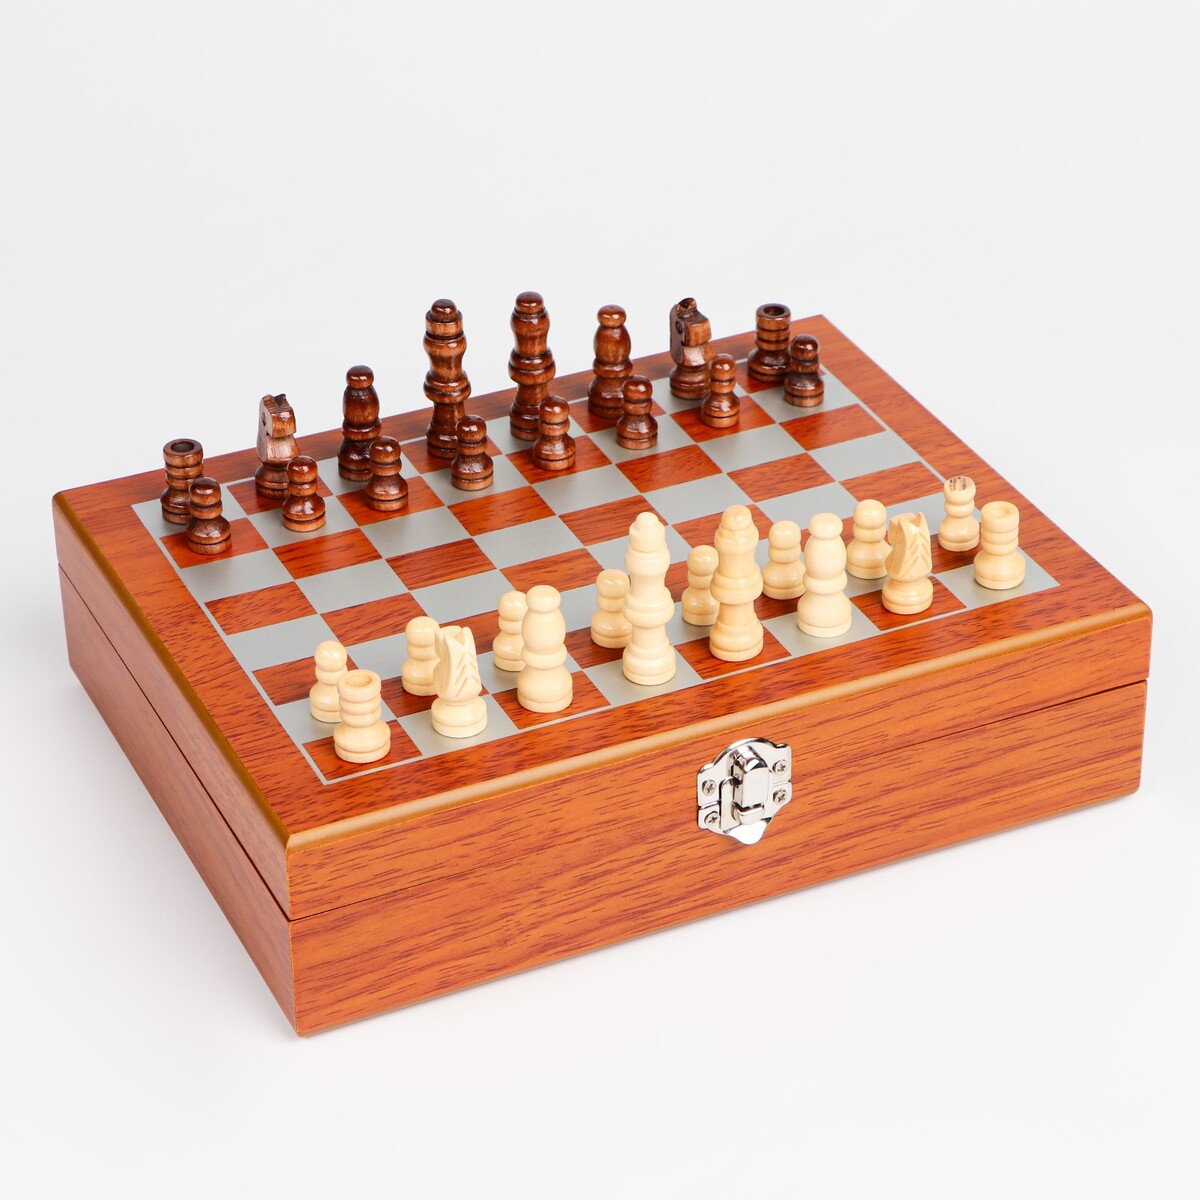 Набор 7 в 1: фляжка 8 oz, 4 рюмки, воронка, шахматы, 18 х 24 см набор 4 в 1 шахматы домино 2 колоды карт 25 х 25 см